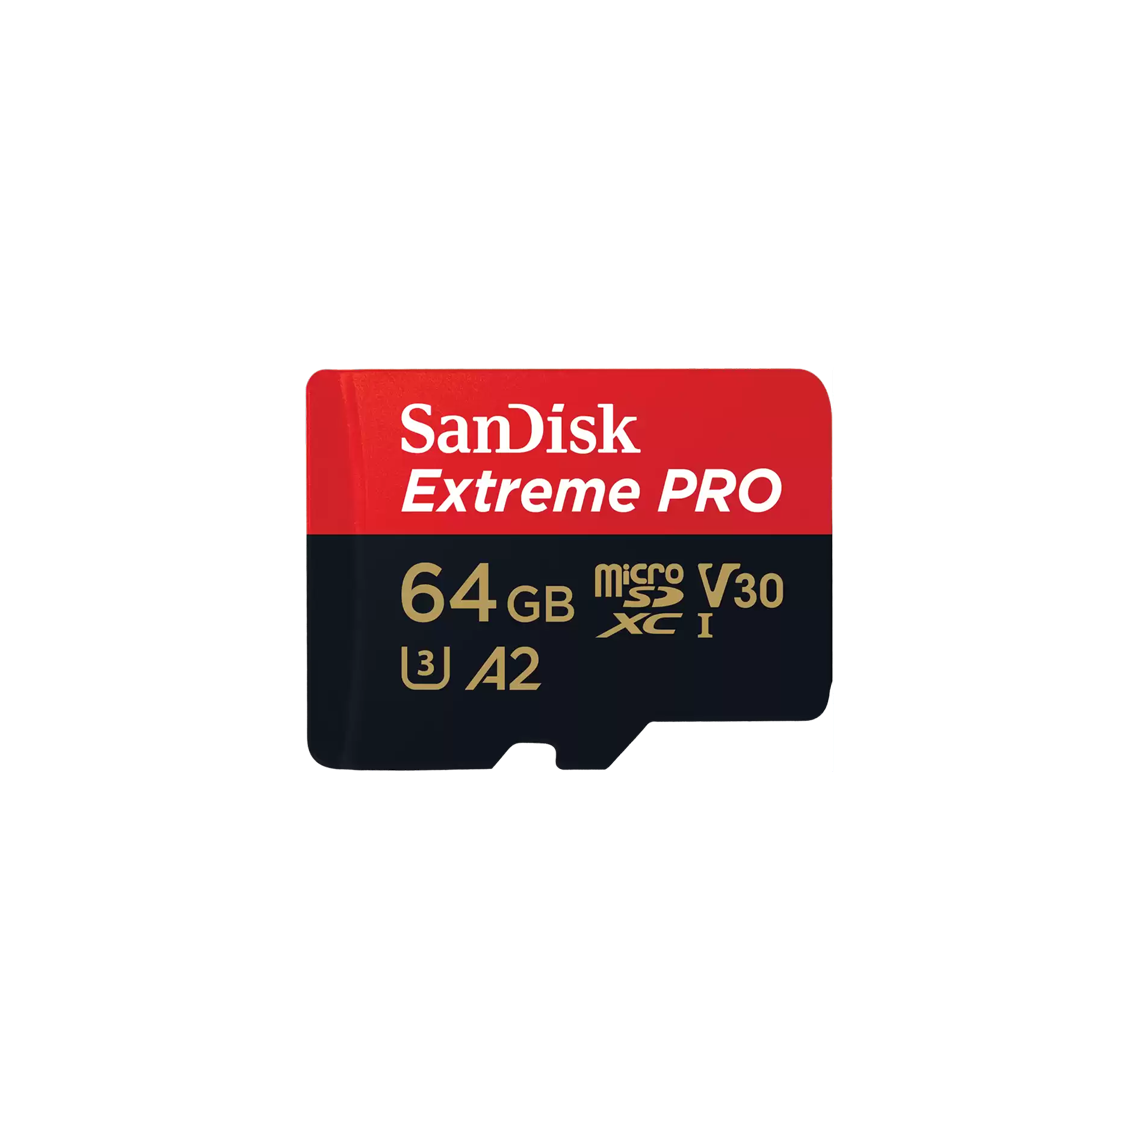 SanDisk Extreme Pro 64 GB Class 10/UHS-I microSDXC